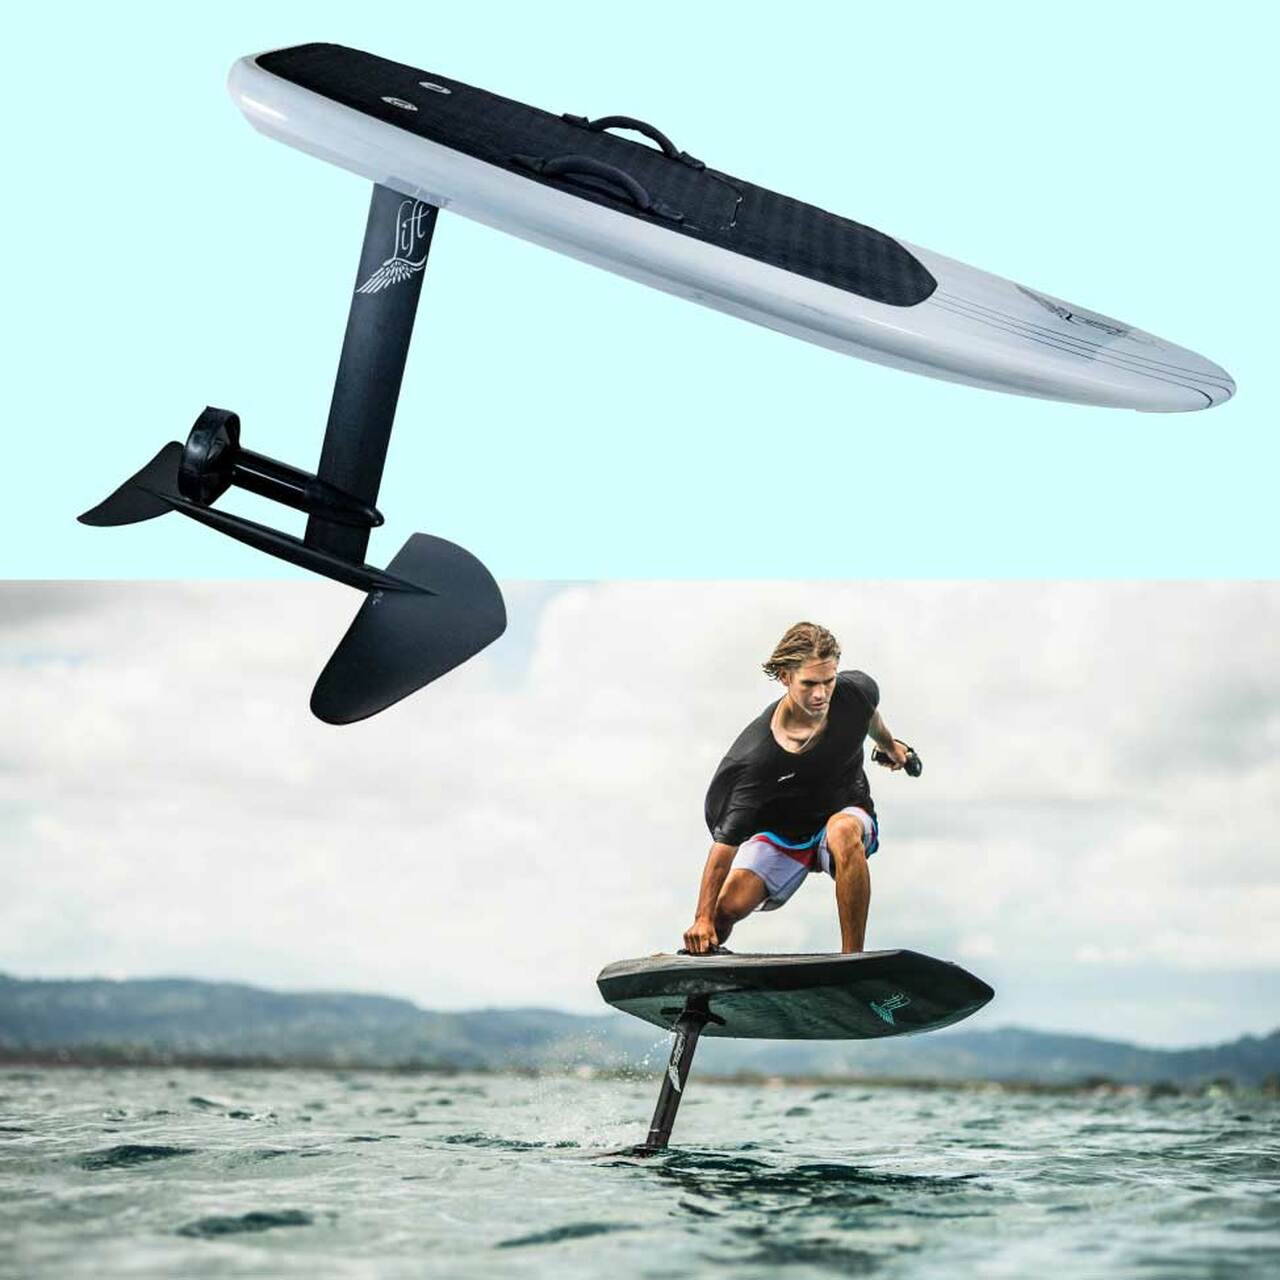 Hydrofoil Surfboard